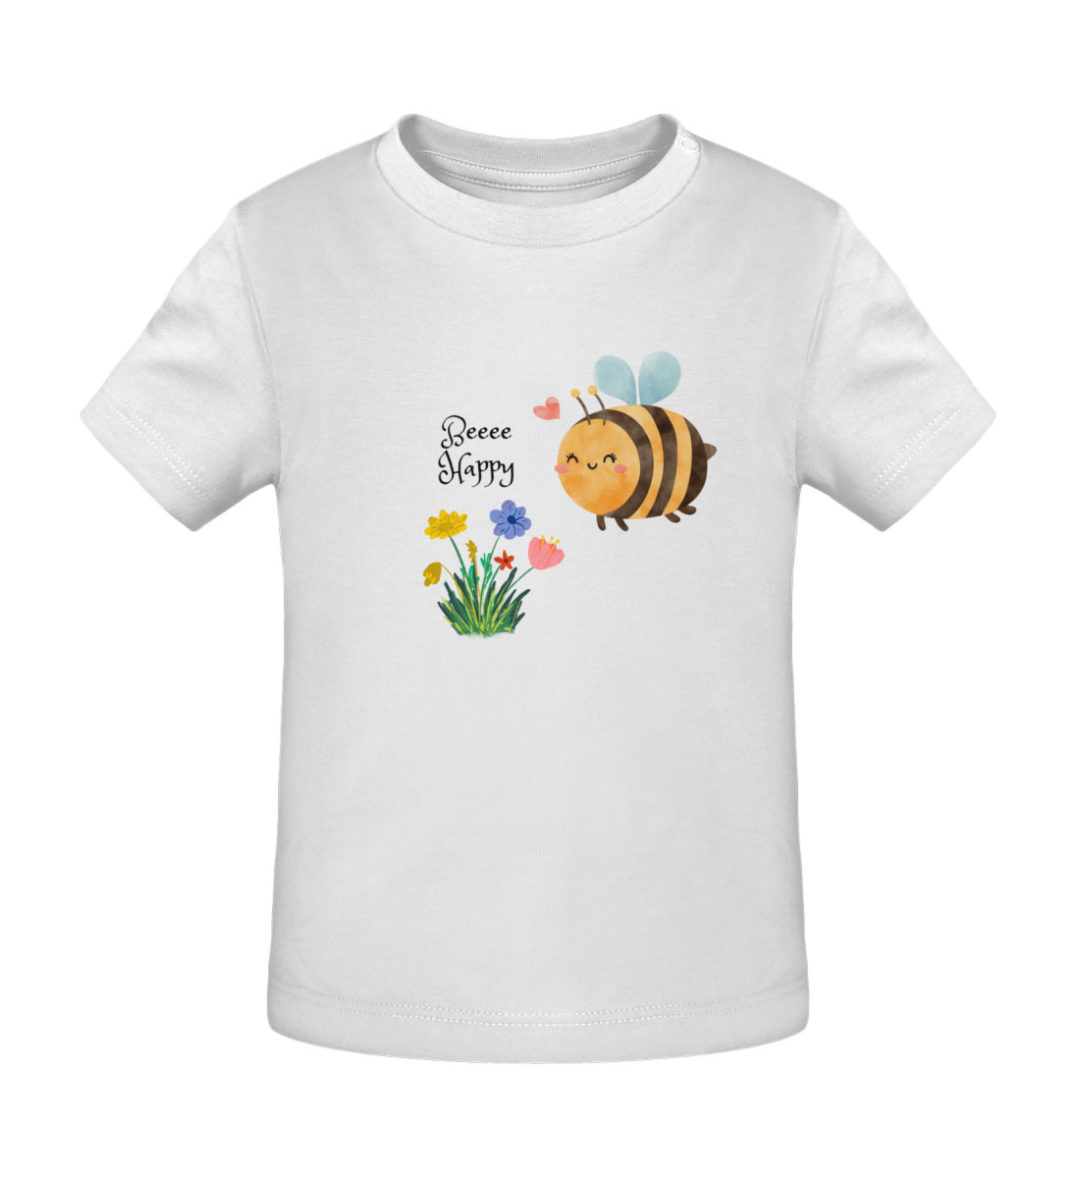 Beee happy - Baby Creator T-Shirt ST/ST-3